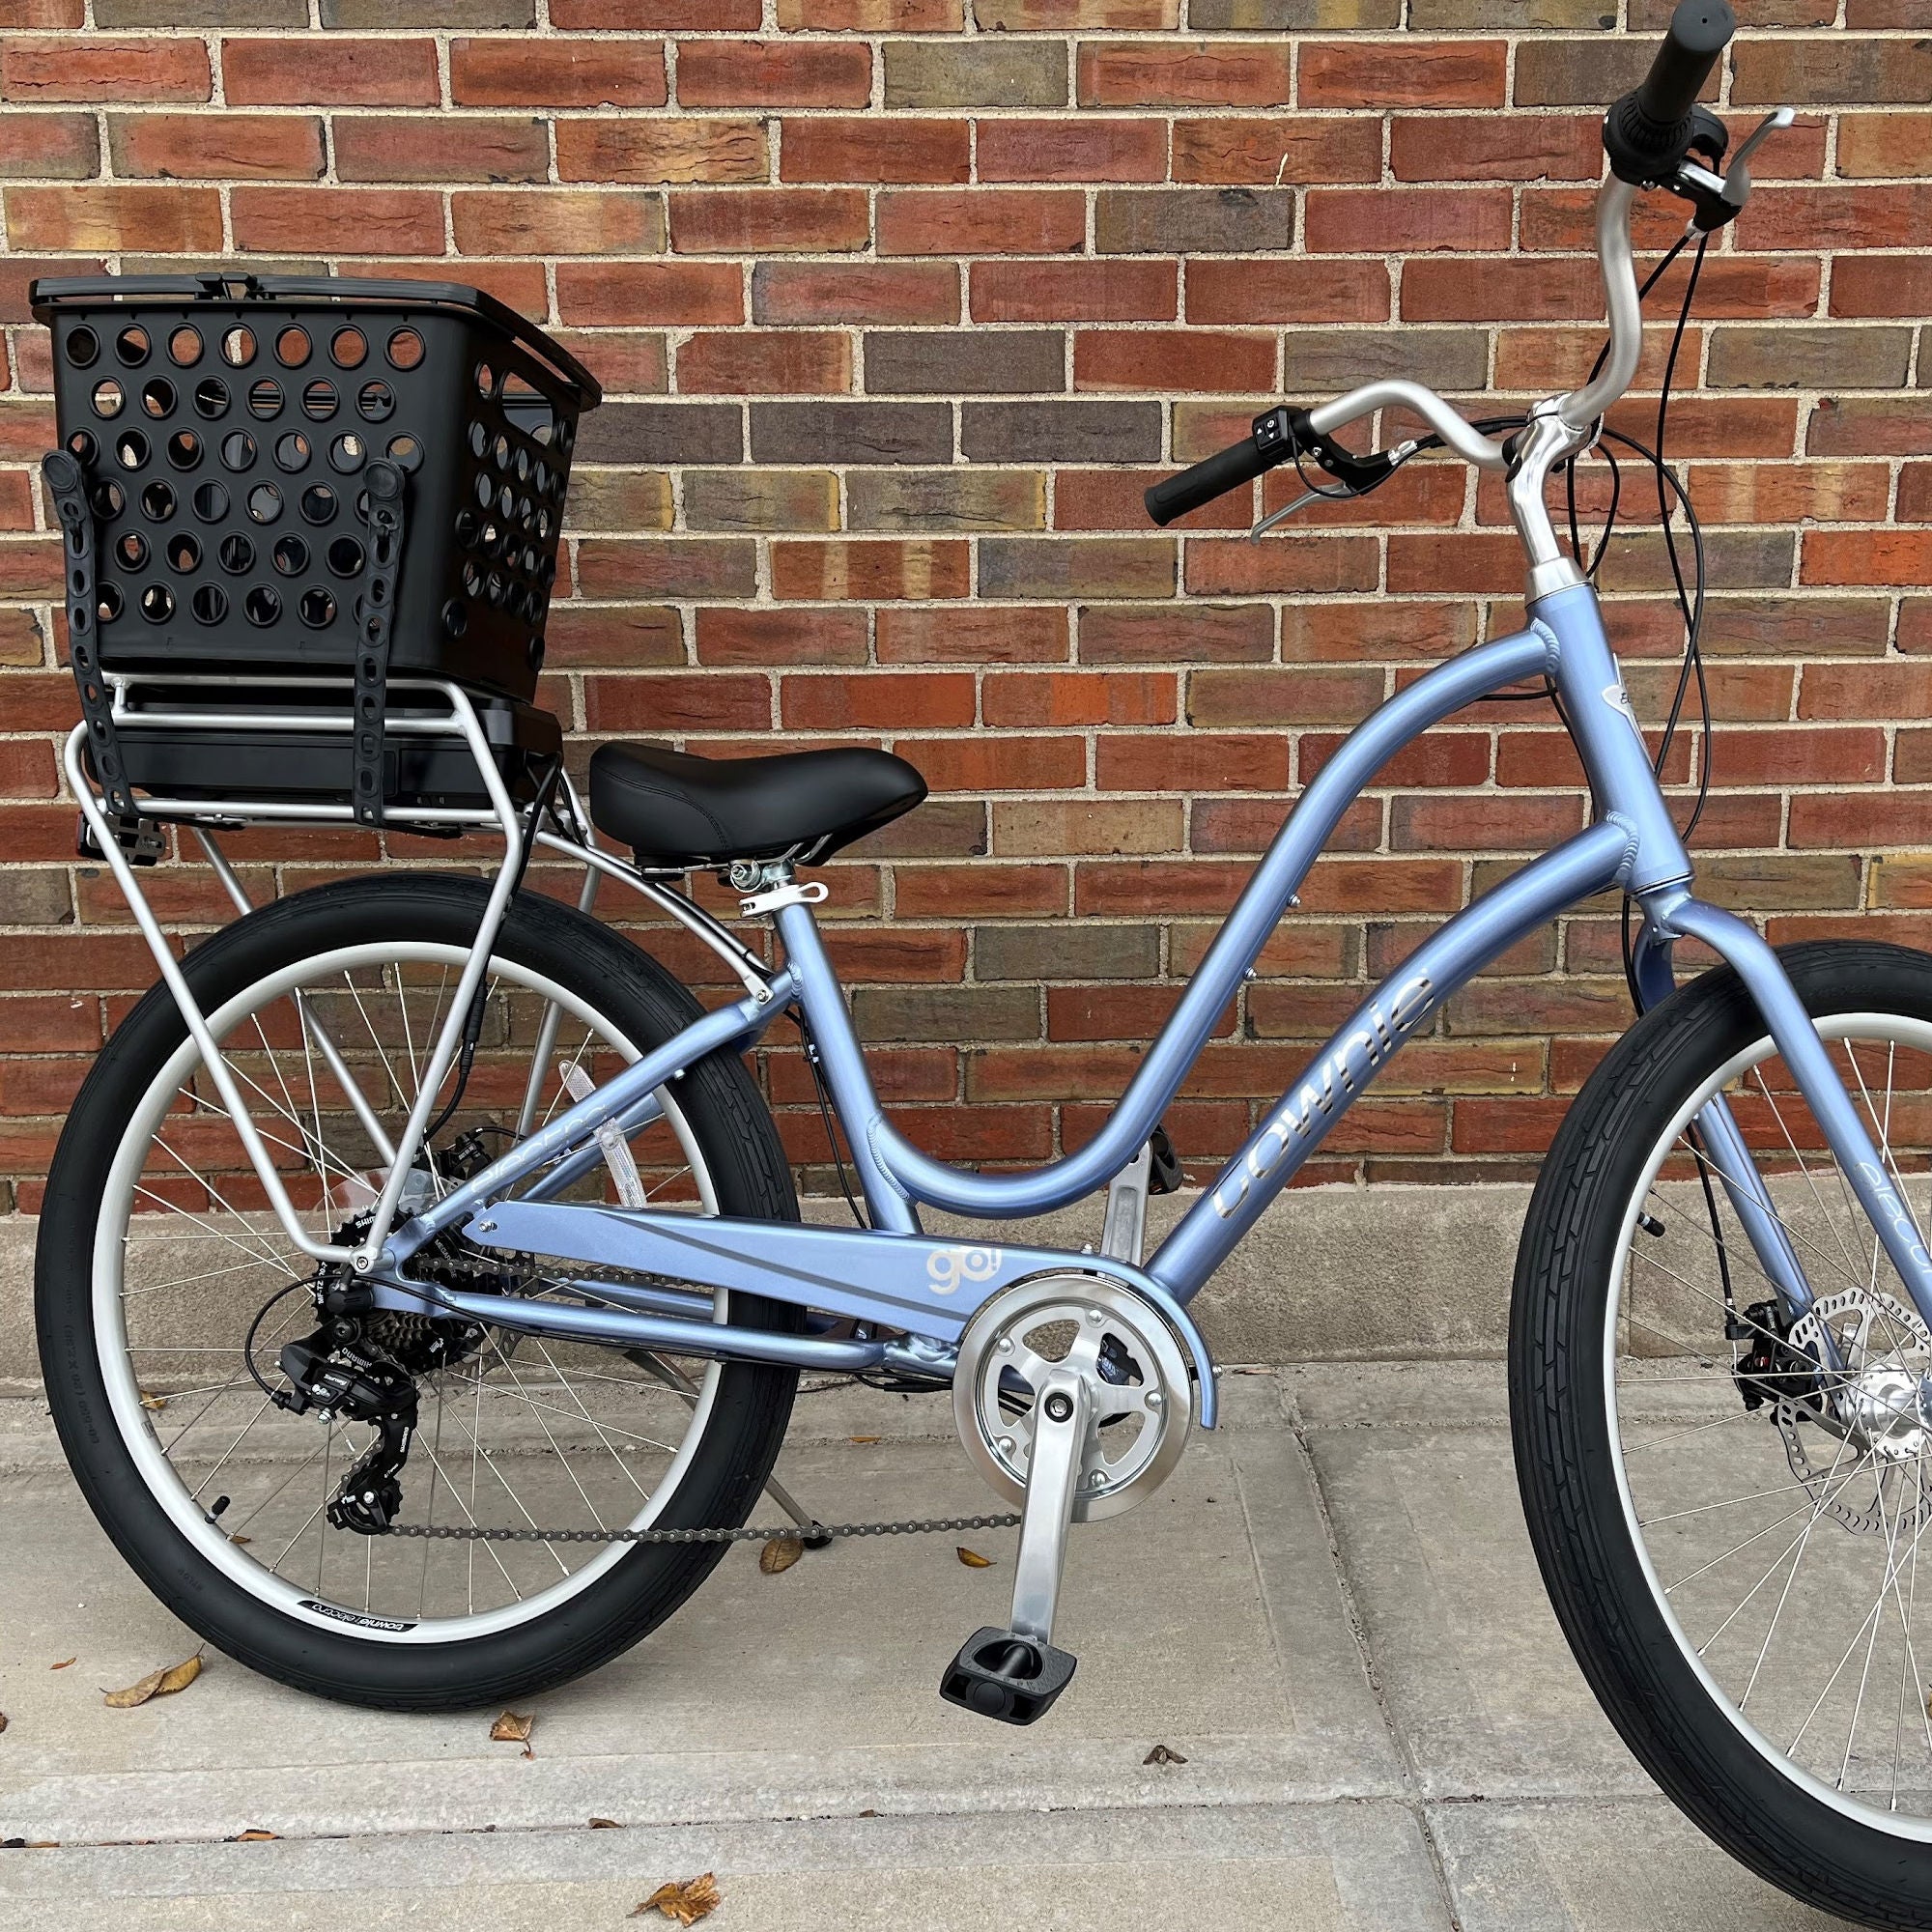 My new bike: an Electra Townie 7D with Nantucket Bike Baskets - rear baskets  yes?